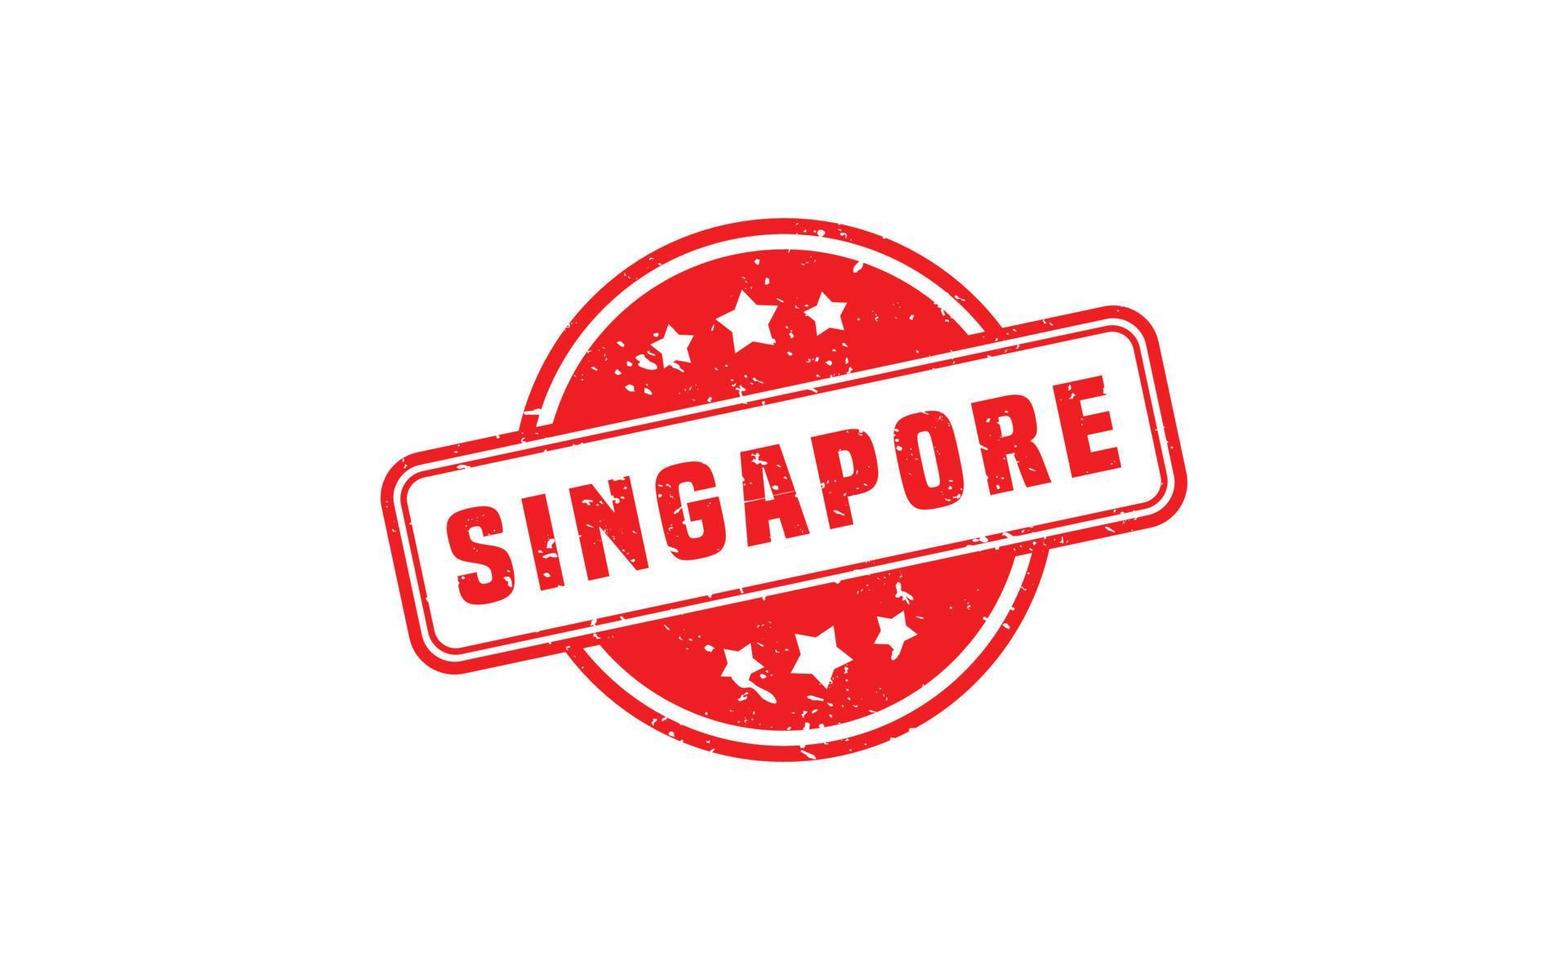 borracha de carimbo de singapura com estilo grunge em fundo branco vetor